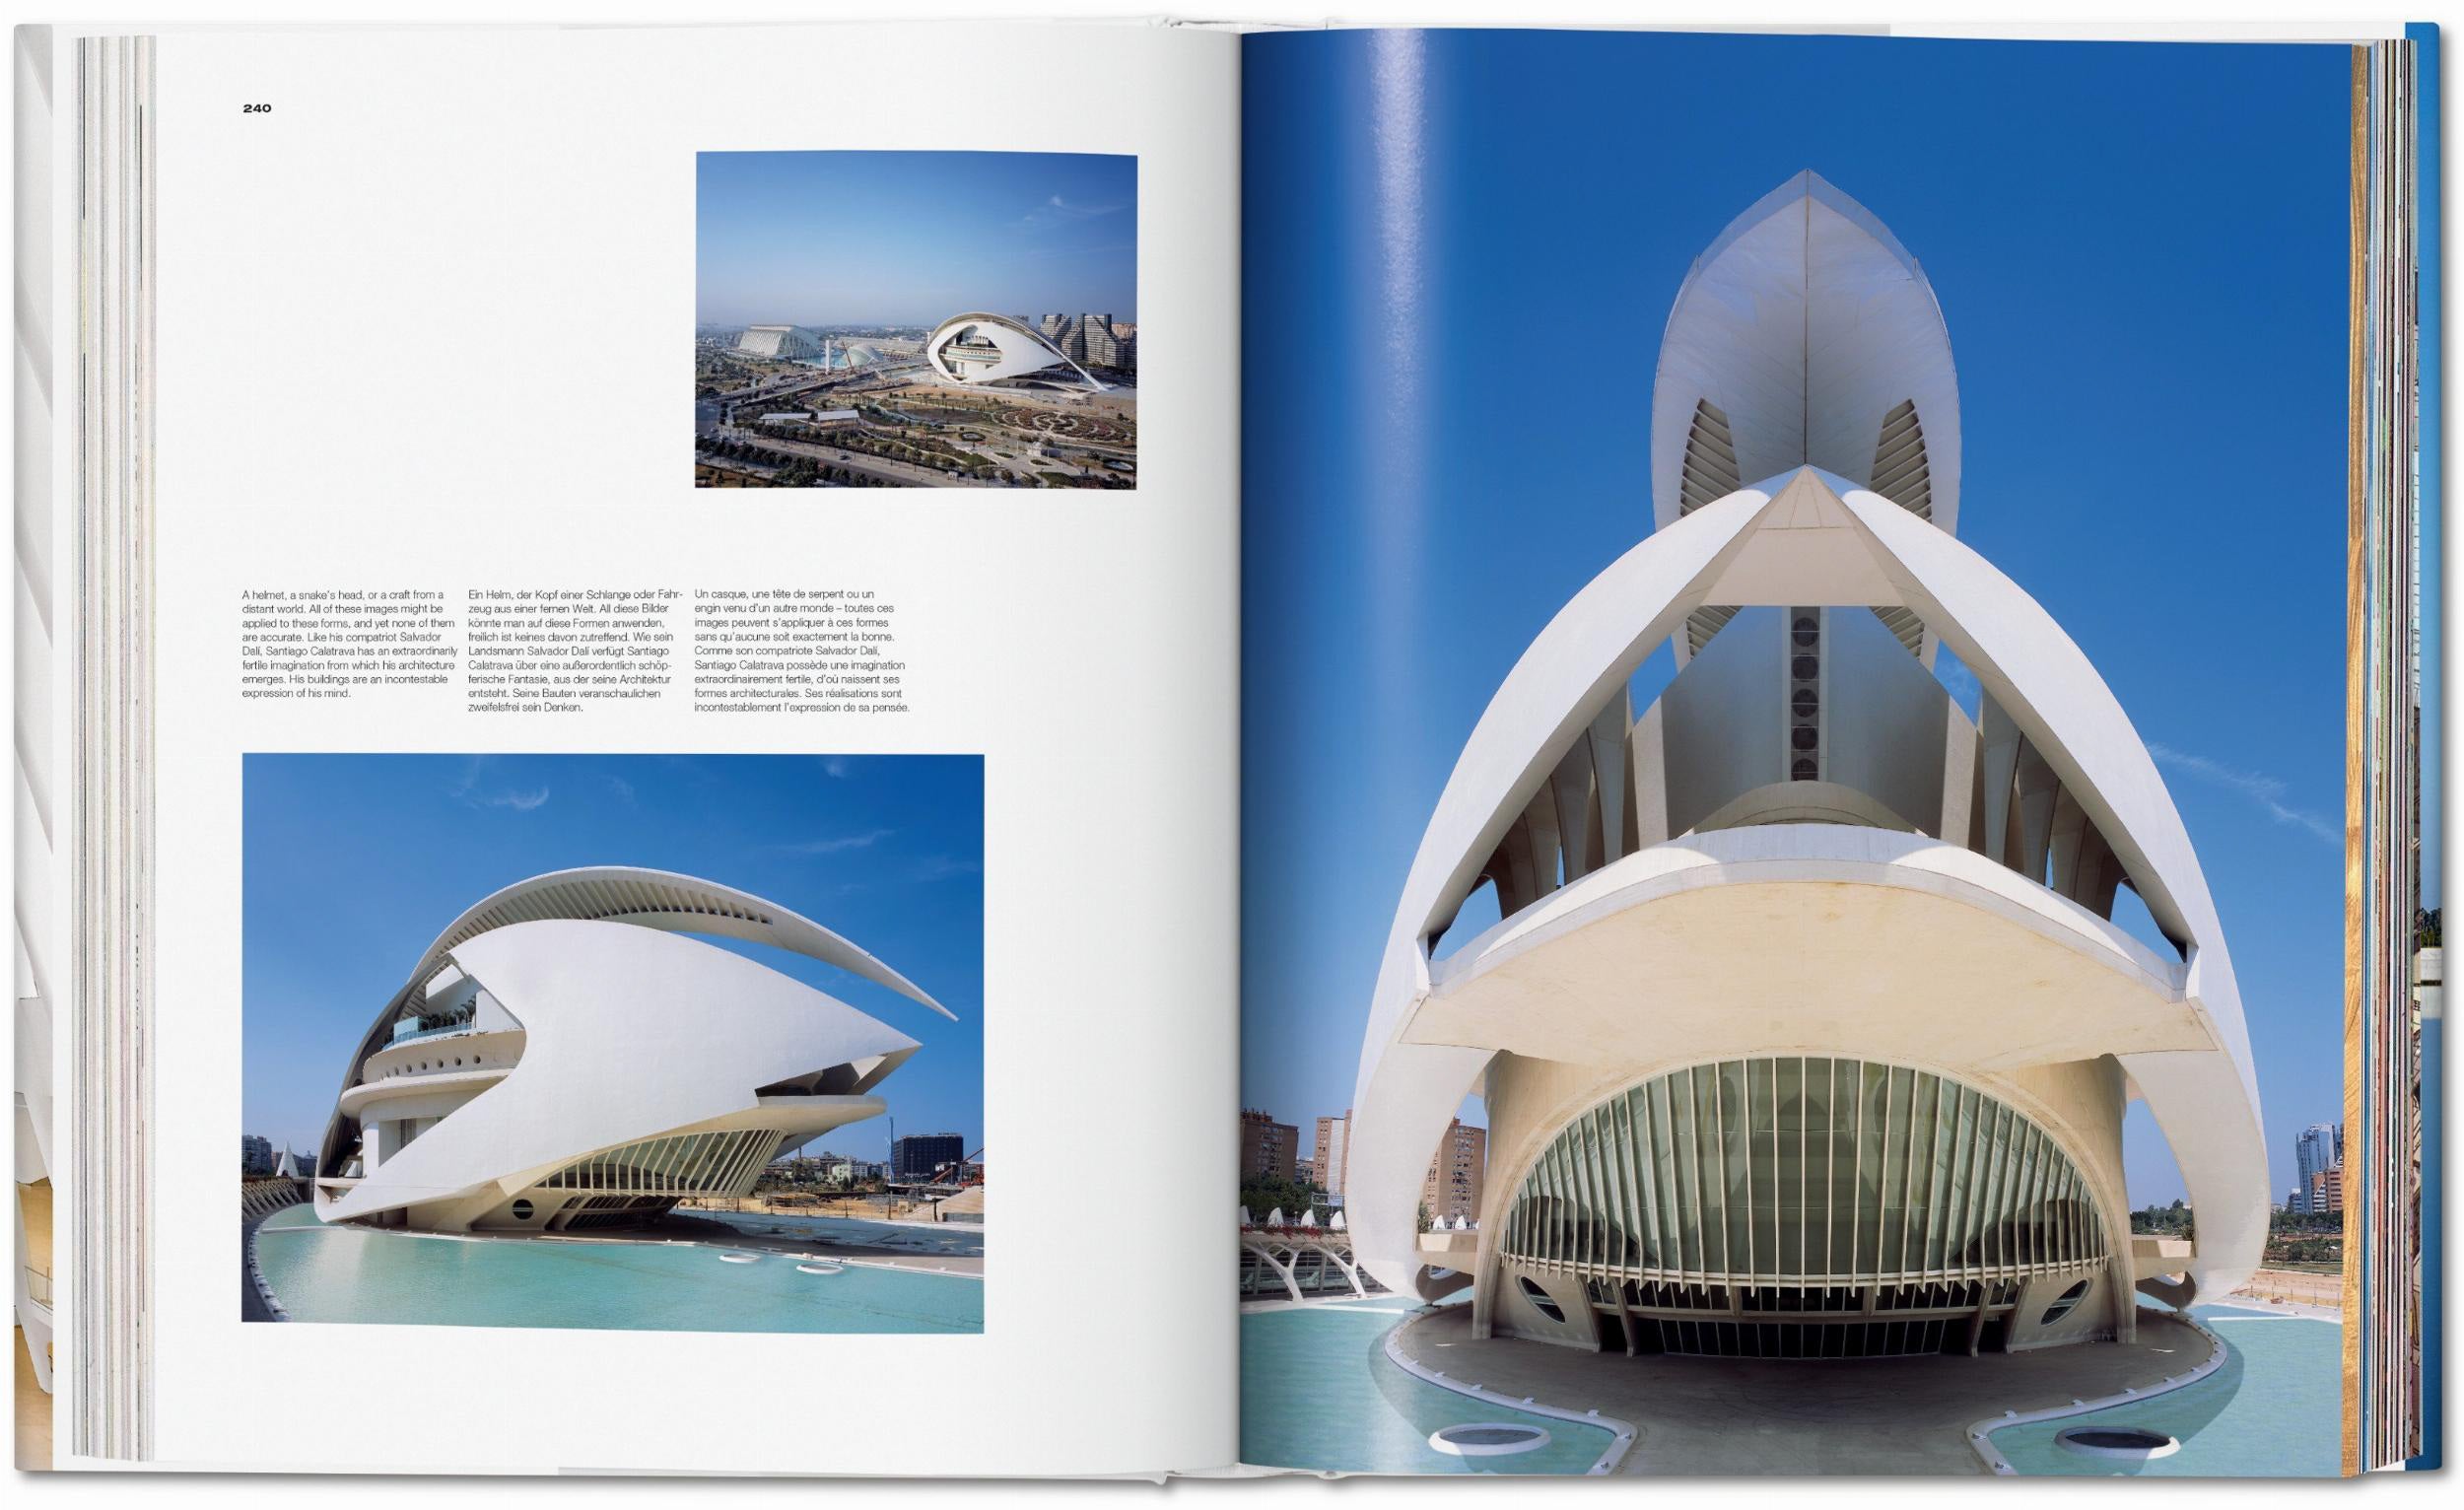 Calatrava. Complete Works 1979-Today